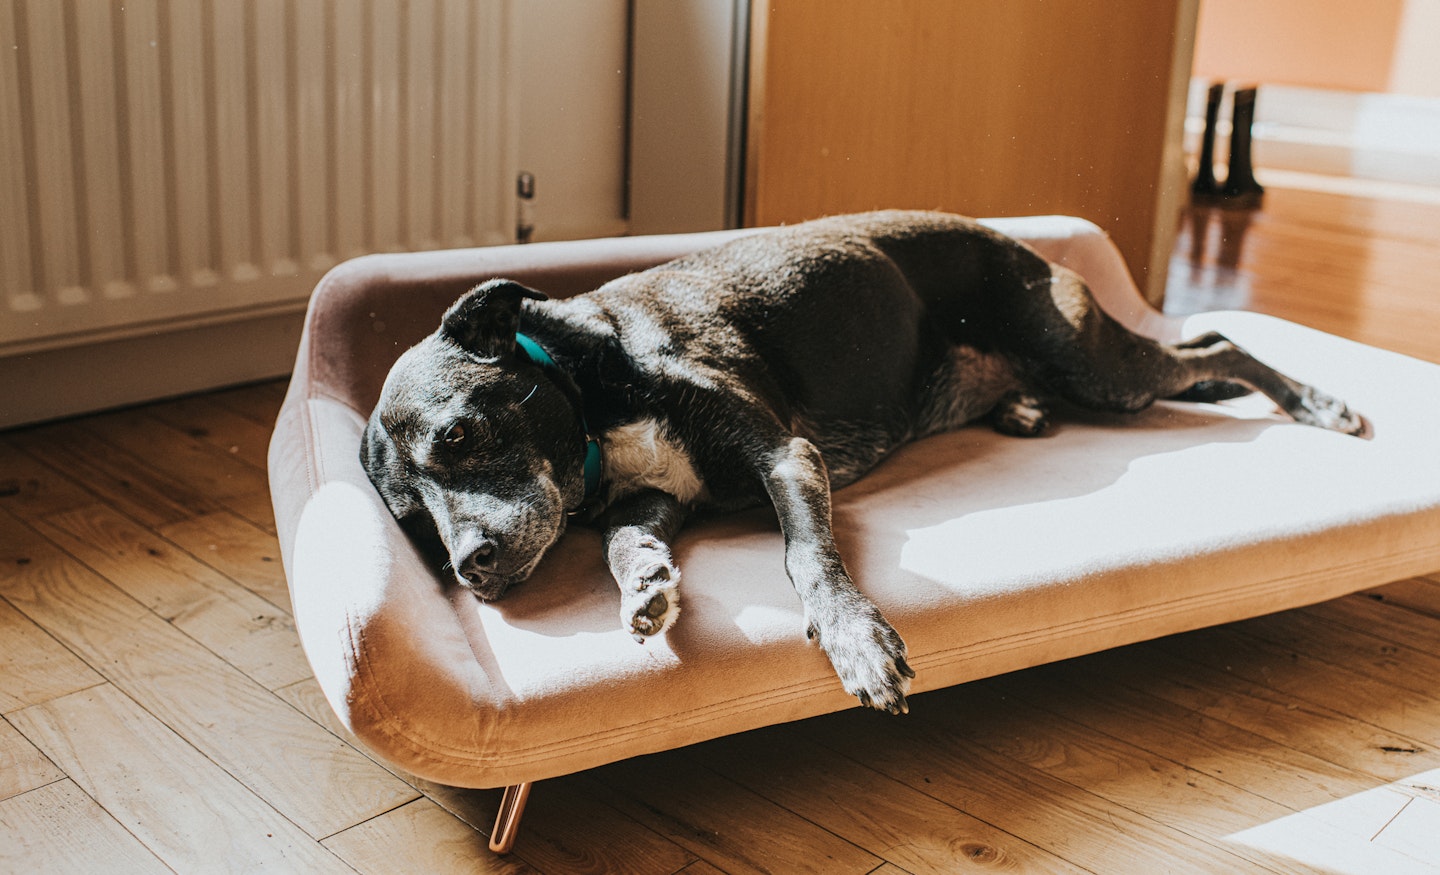 Dog sofa bed